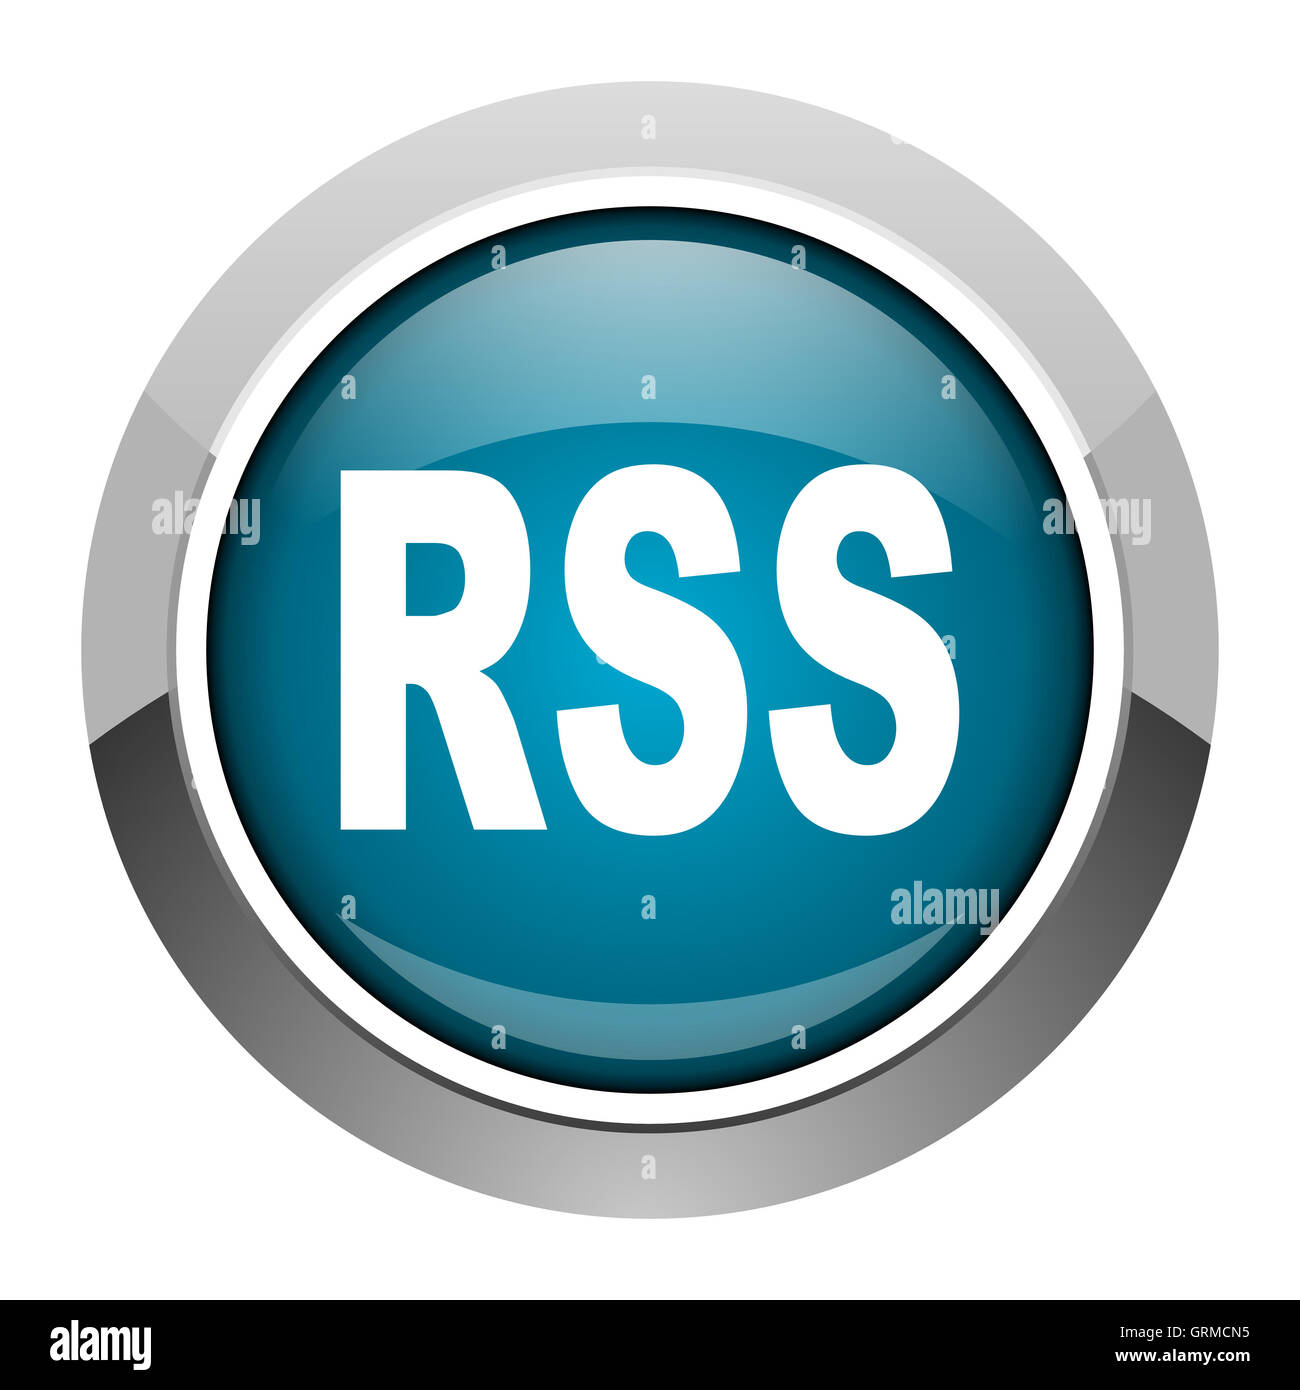 rss icon Stock Photo